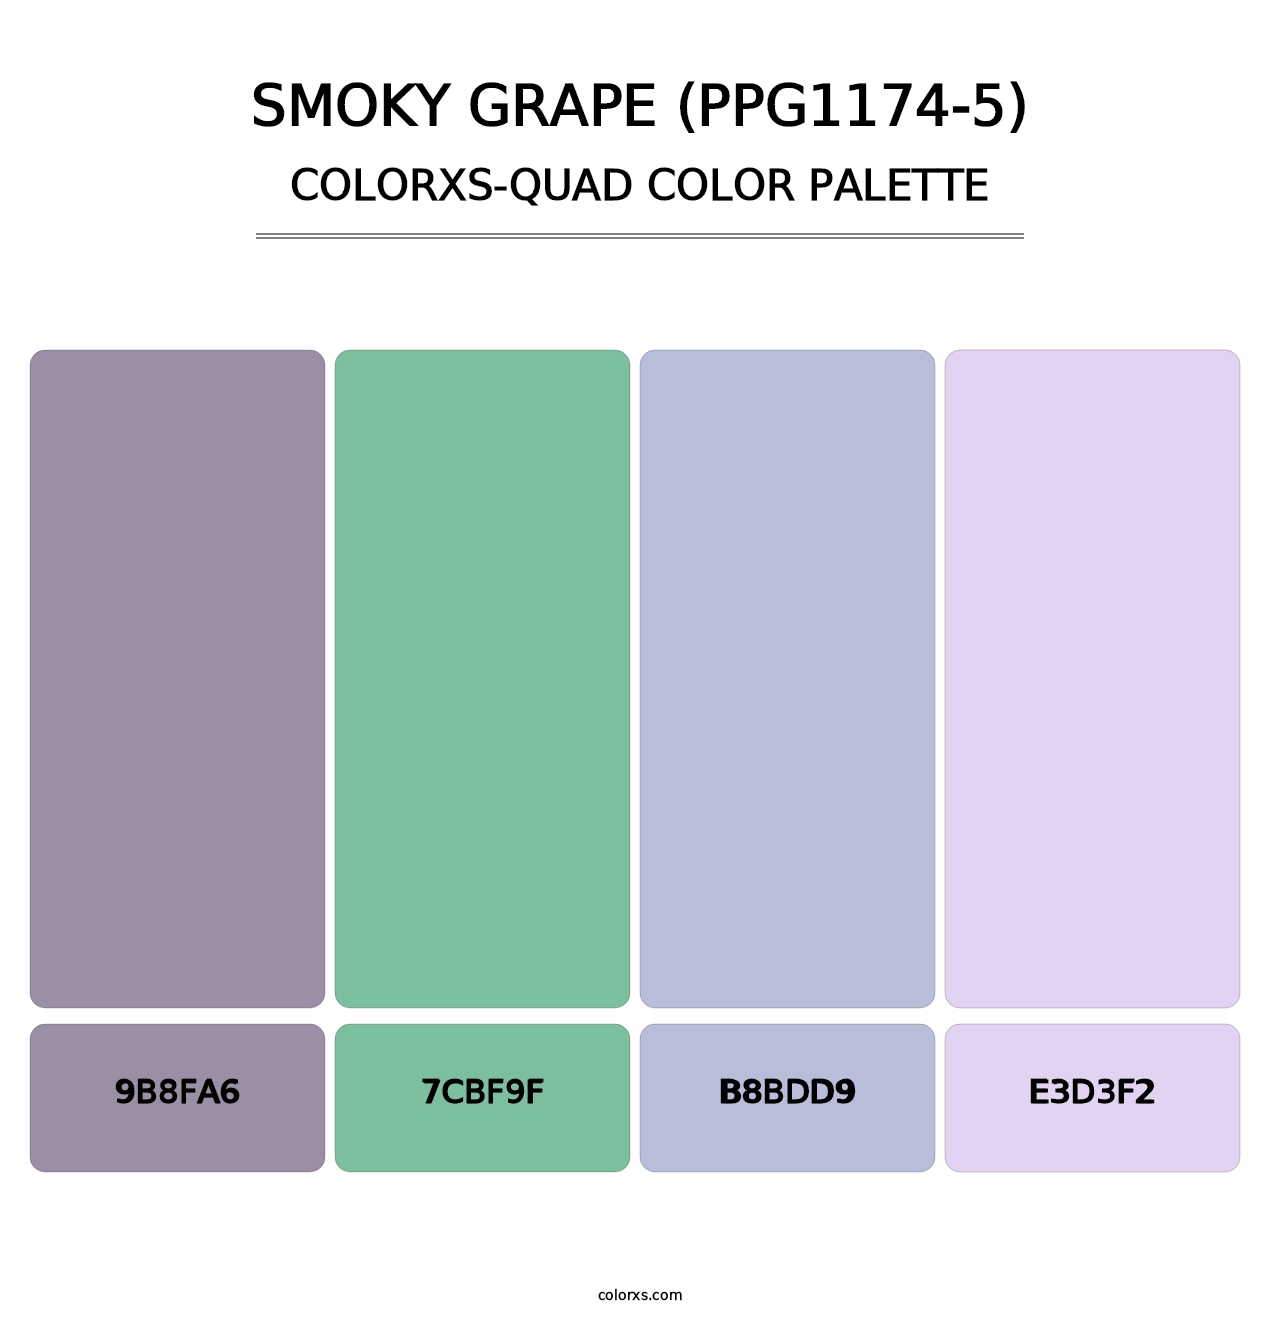 Smoky Grape (PPG1174-5) - Colorxs Quad Palette